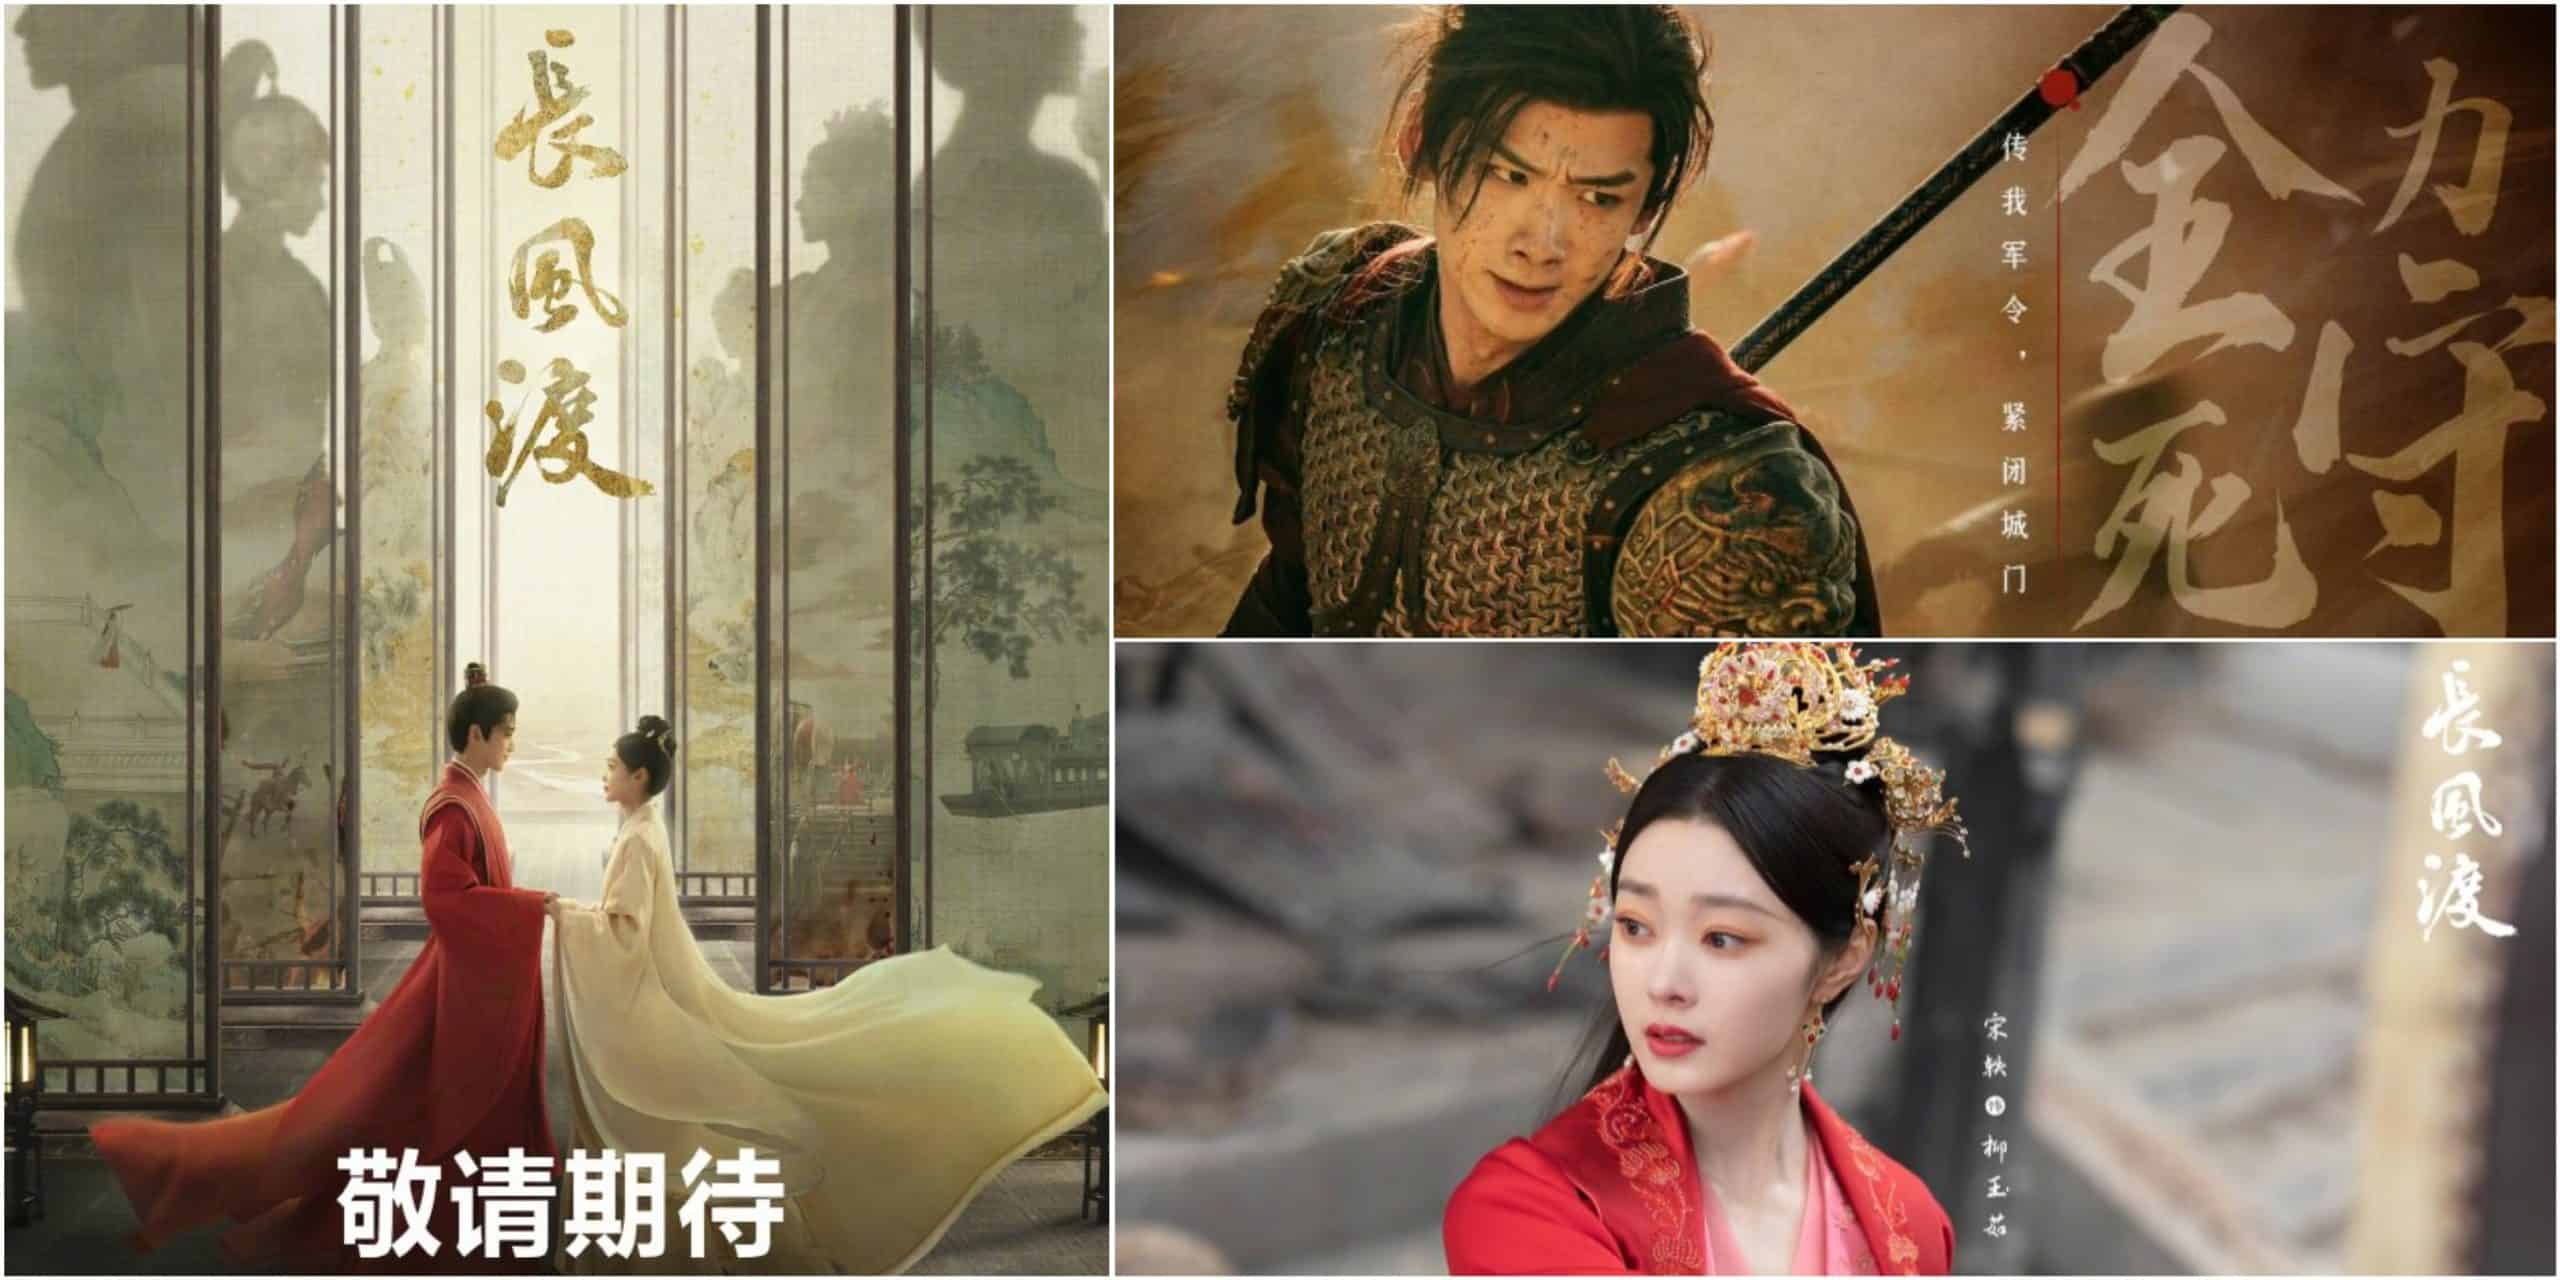 Chinese Period Drama Destined Episode 30 Release Date